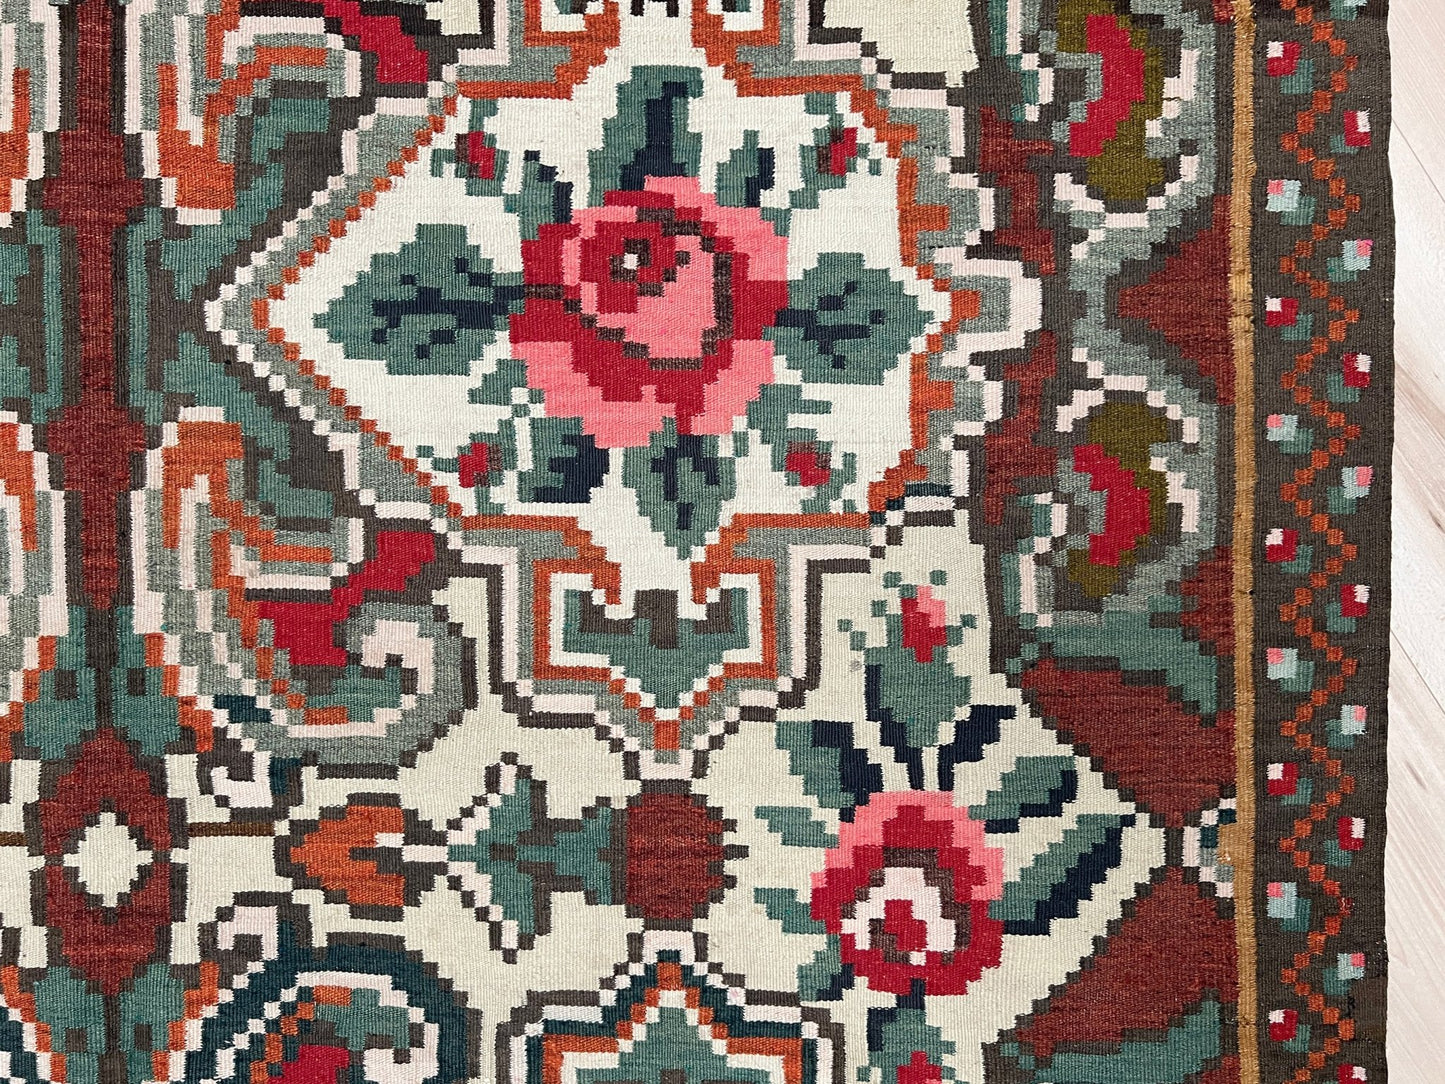 moldovan rose kilim rug shop san francisco bay area. Buy handmade rug. Wool rug floral design.